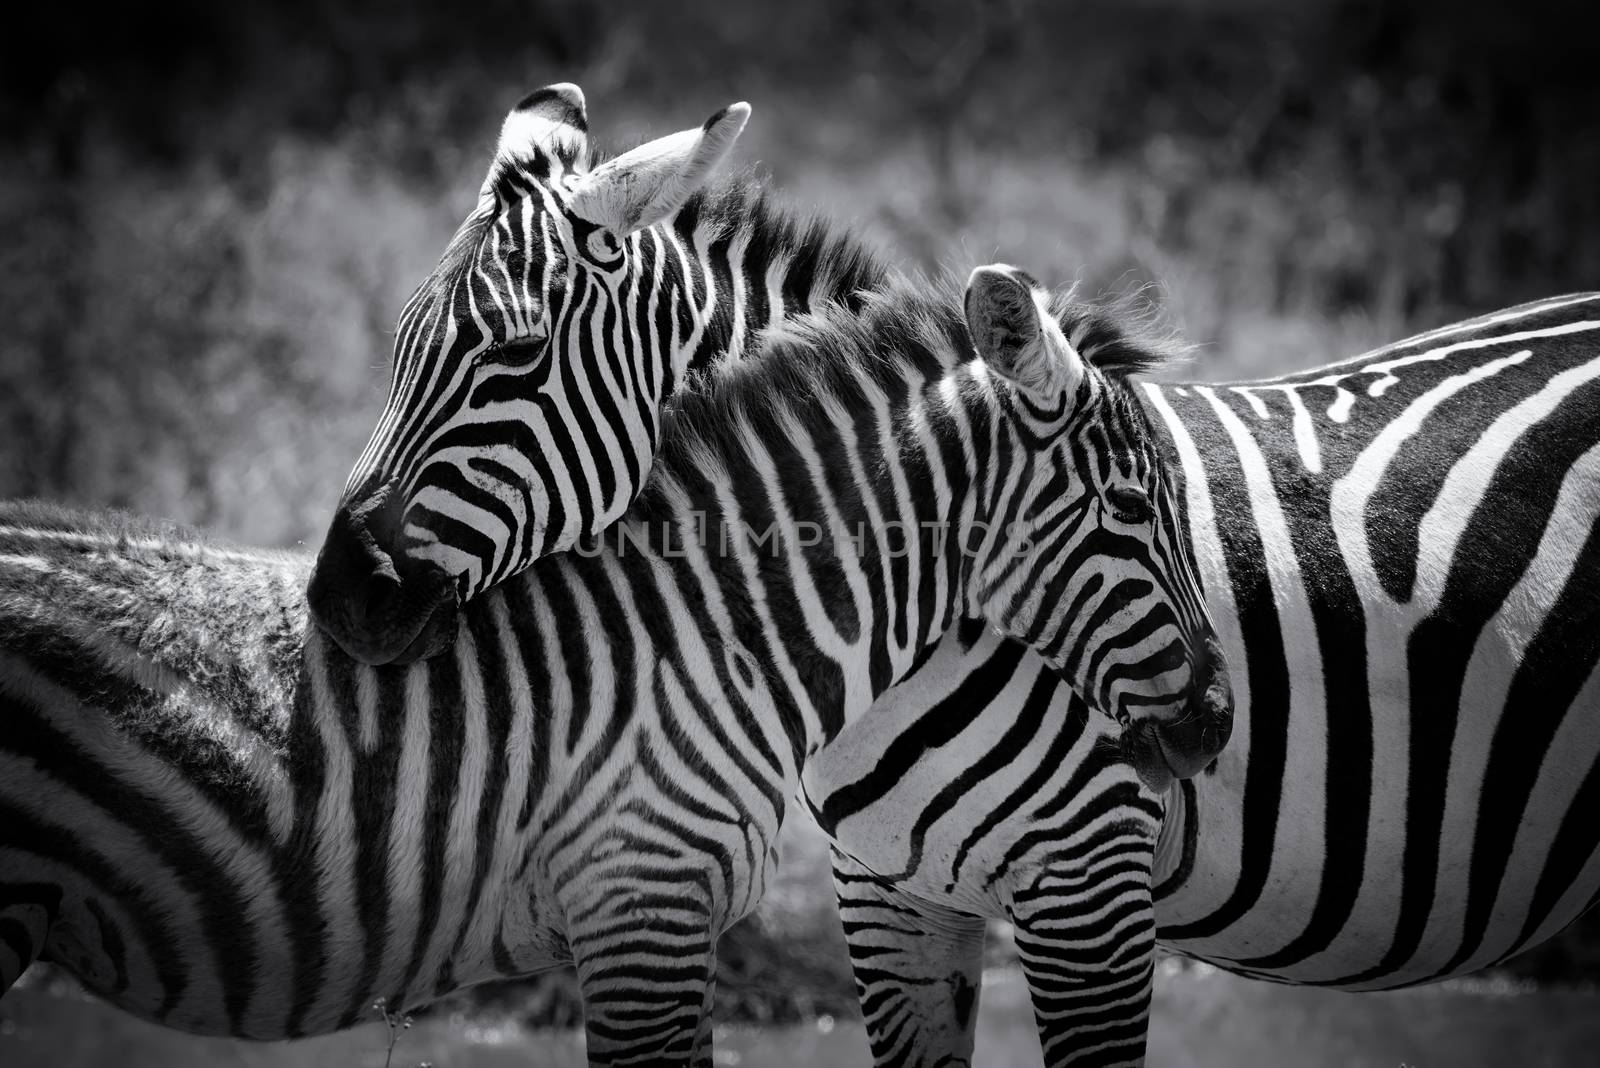 Zebra on grassland in National park of Africa